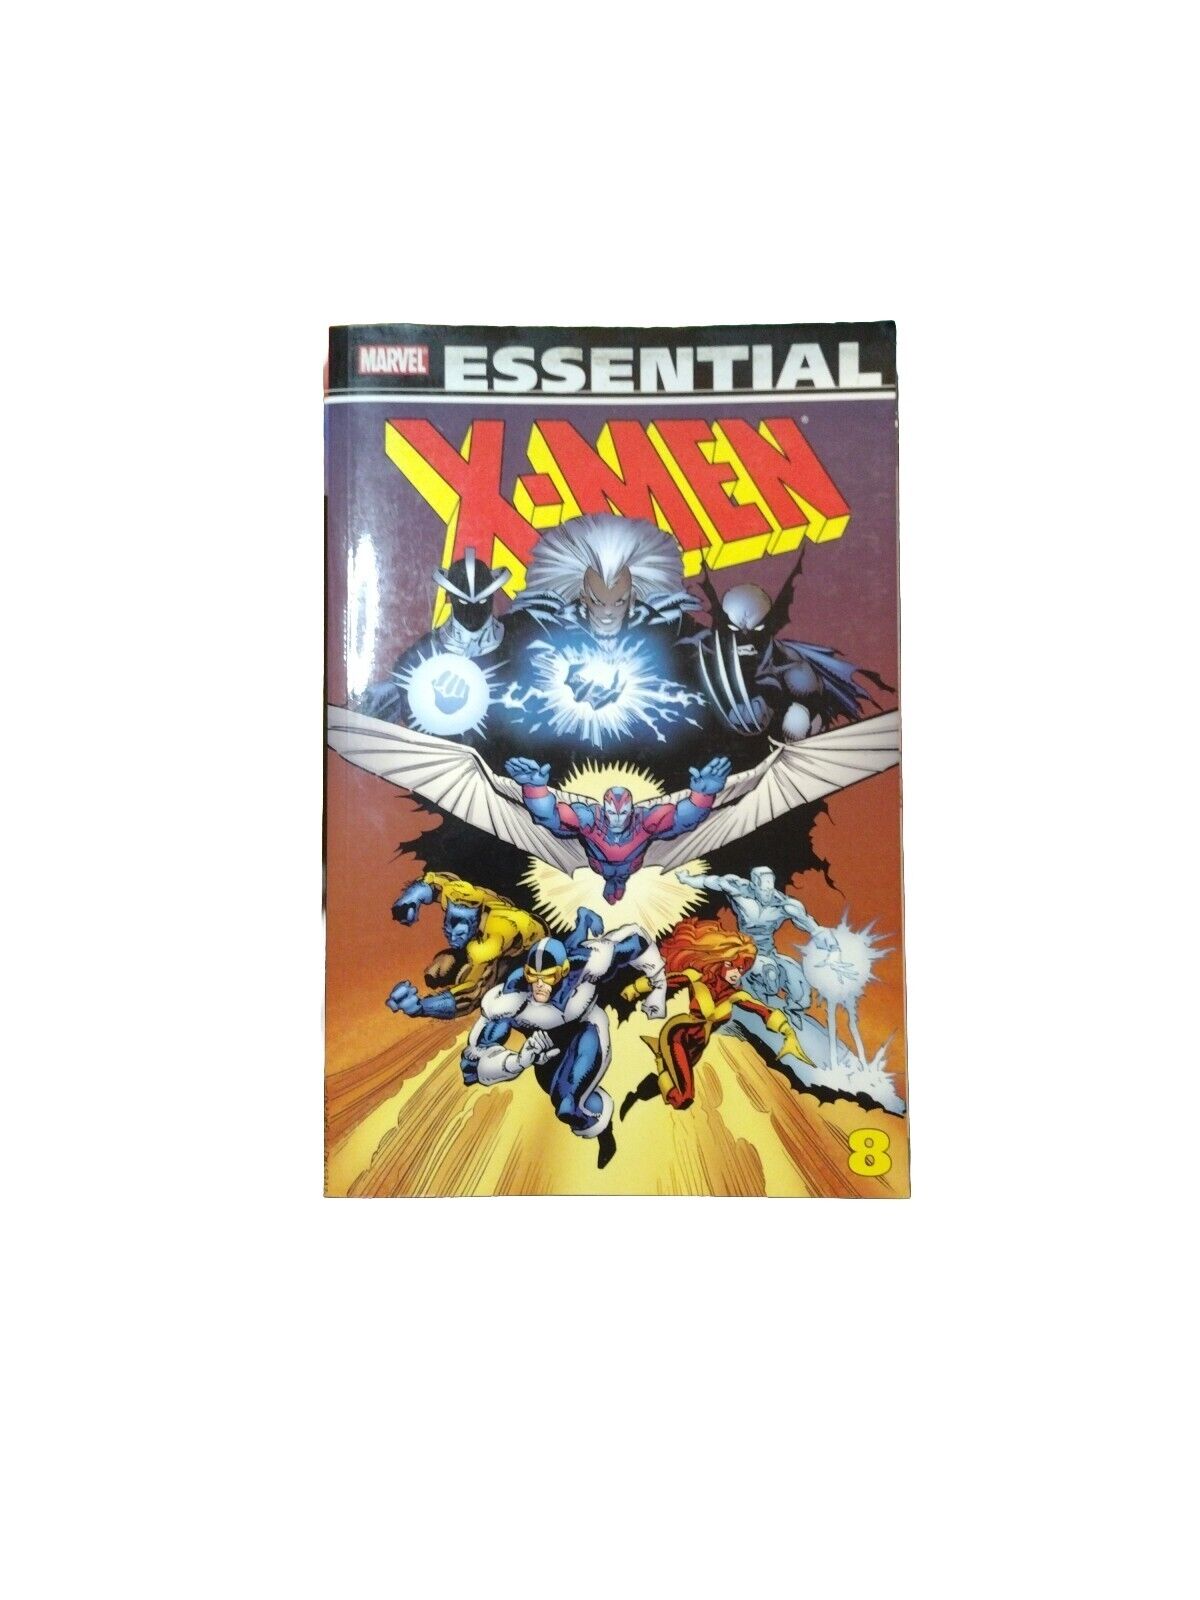 Essential X-Men #8 (Marvel Comics 2007)